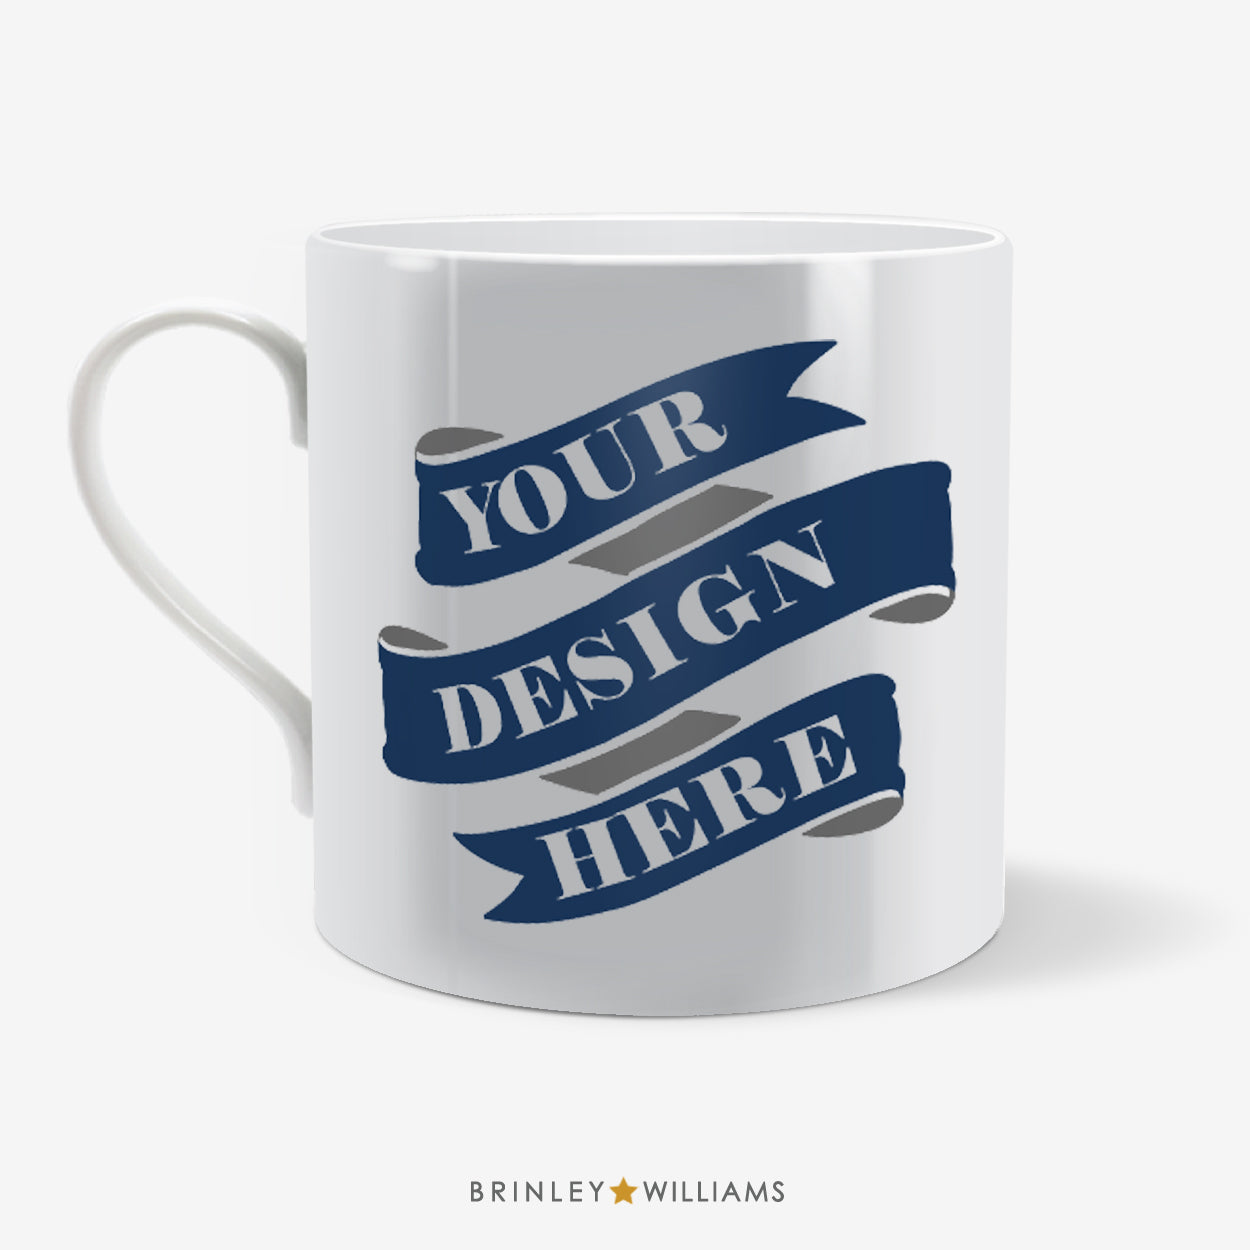 Big Bone China  - Design your own Mug - side 2